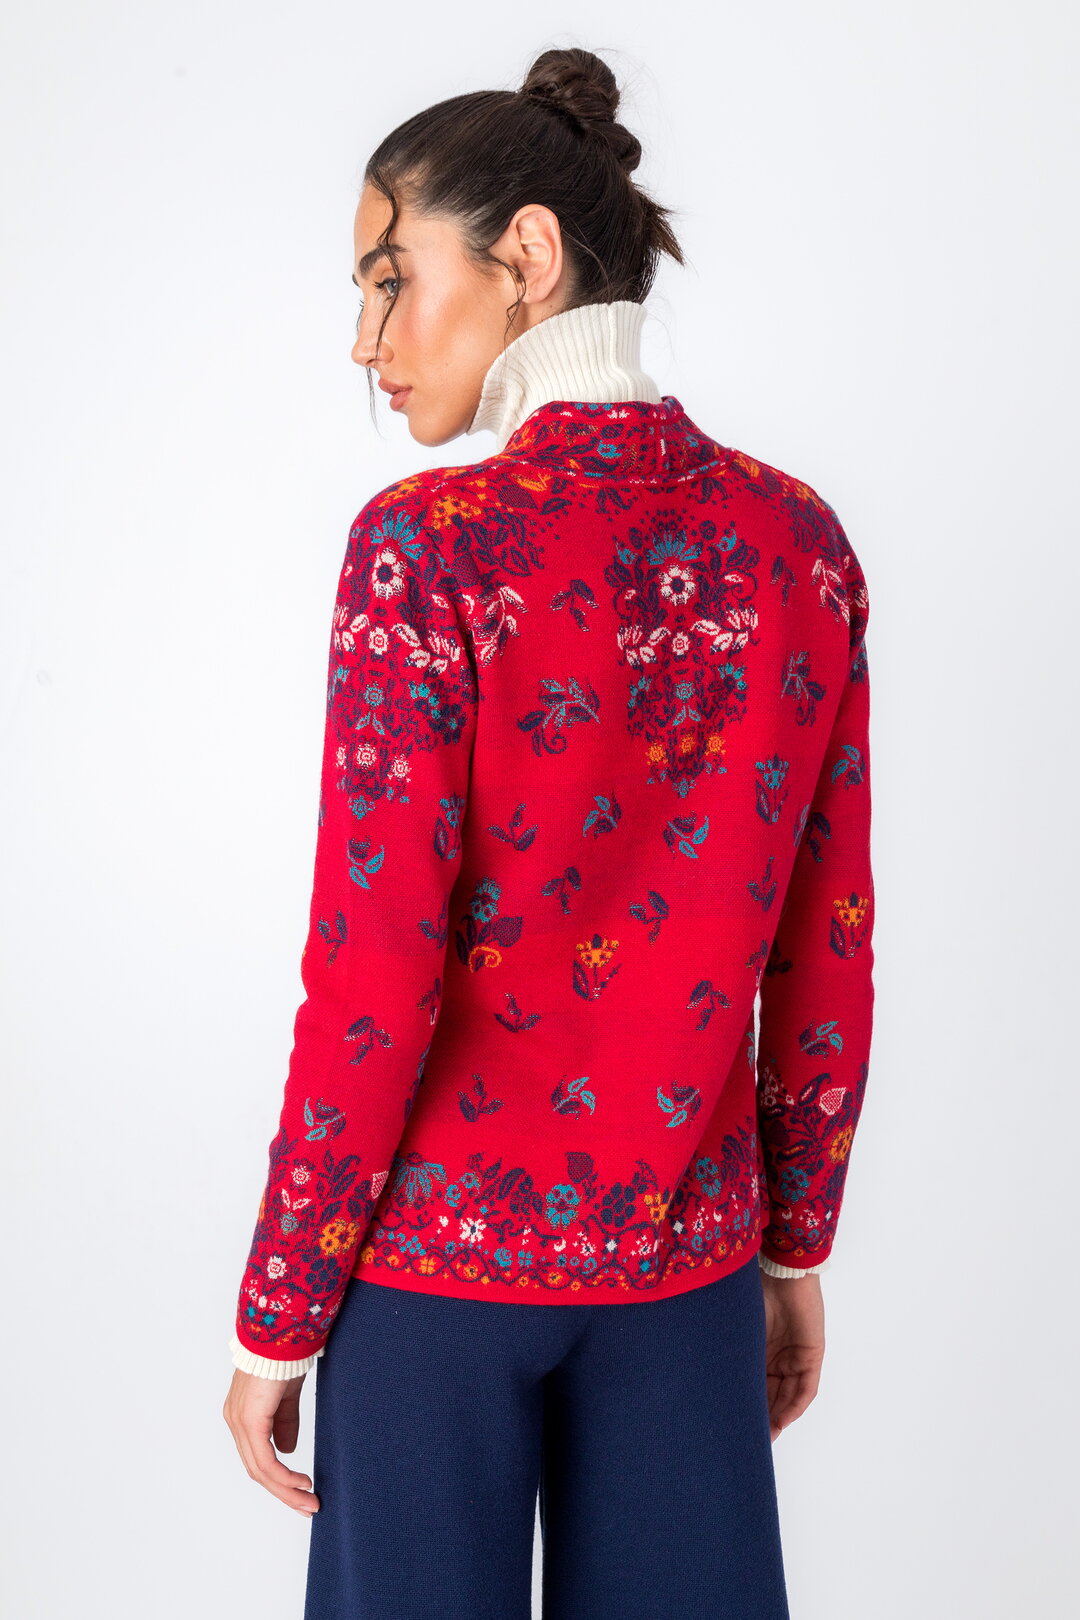 Jacquard Jacket, Floral Pattern